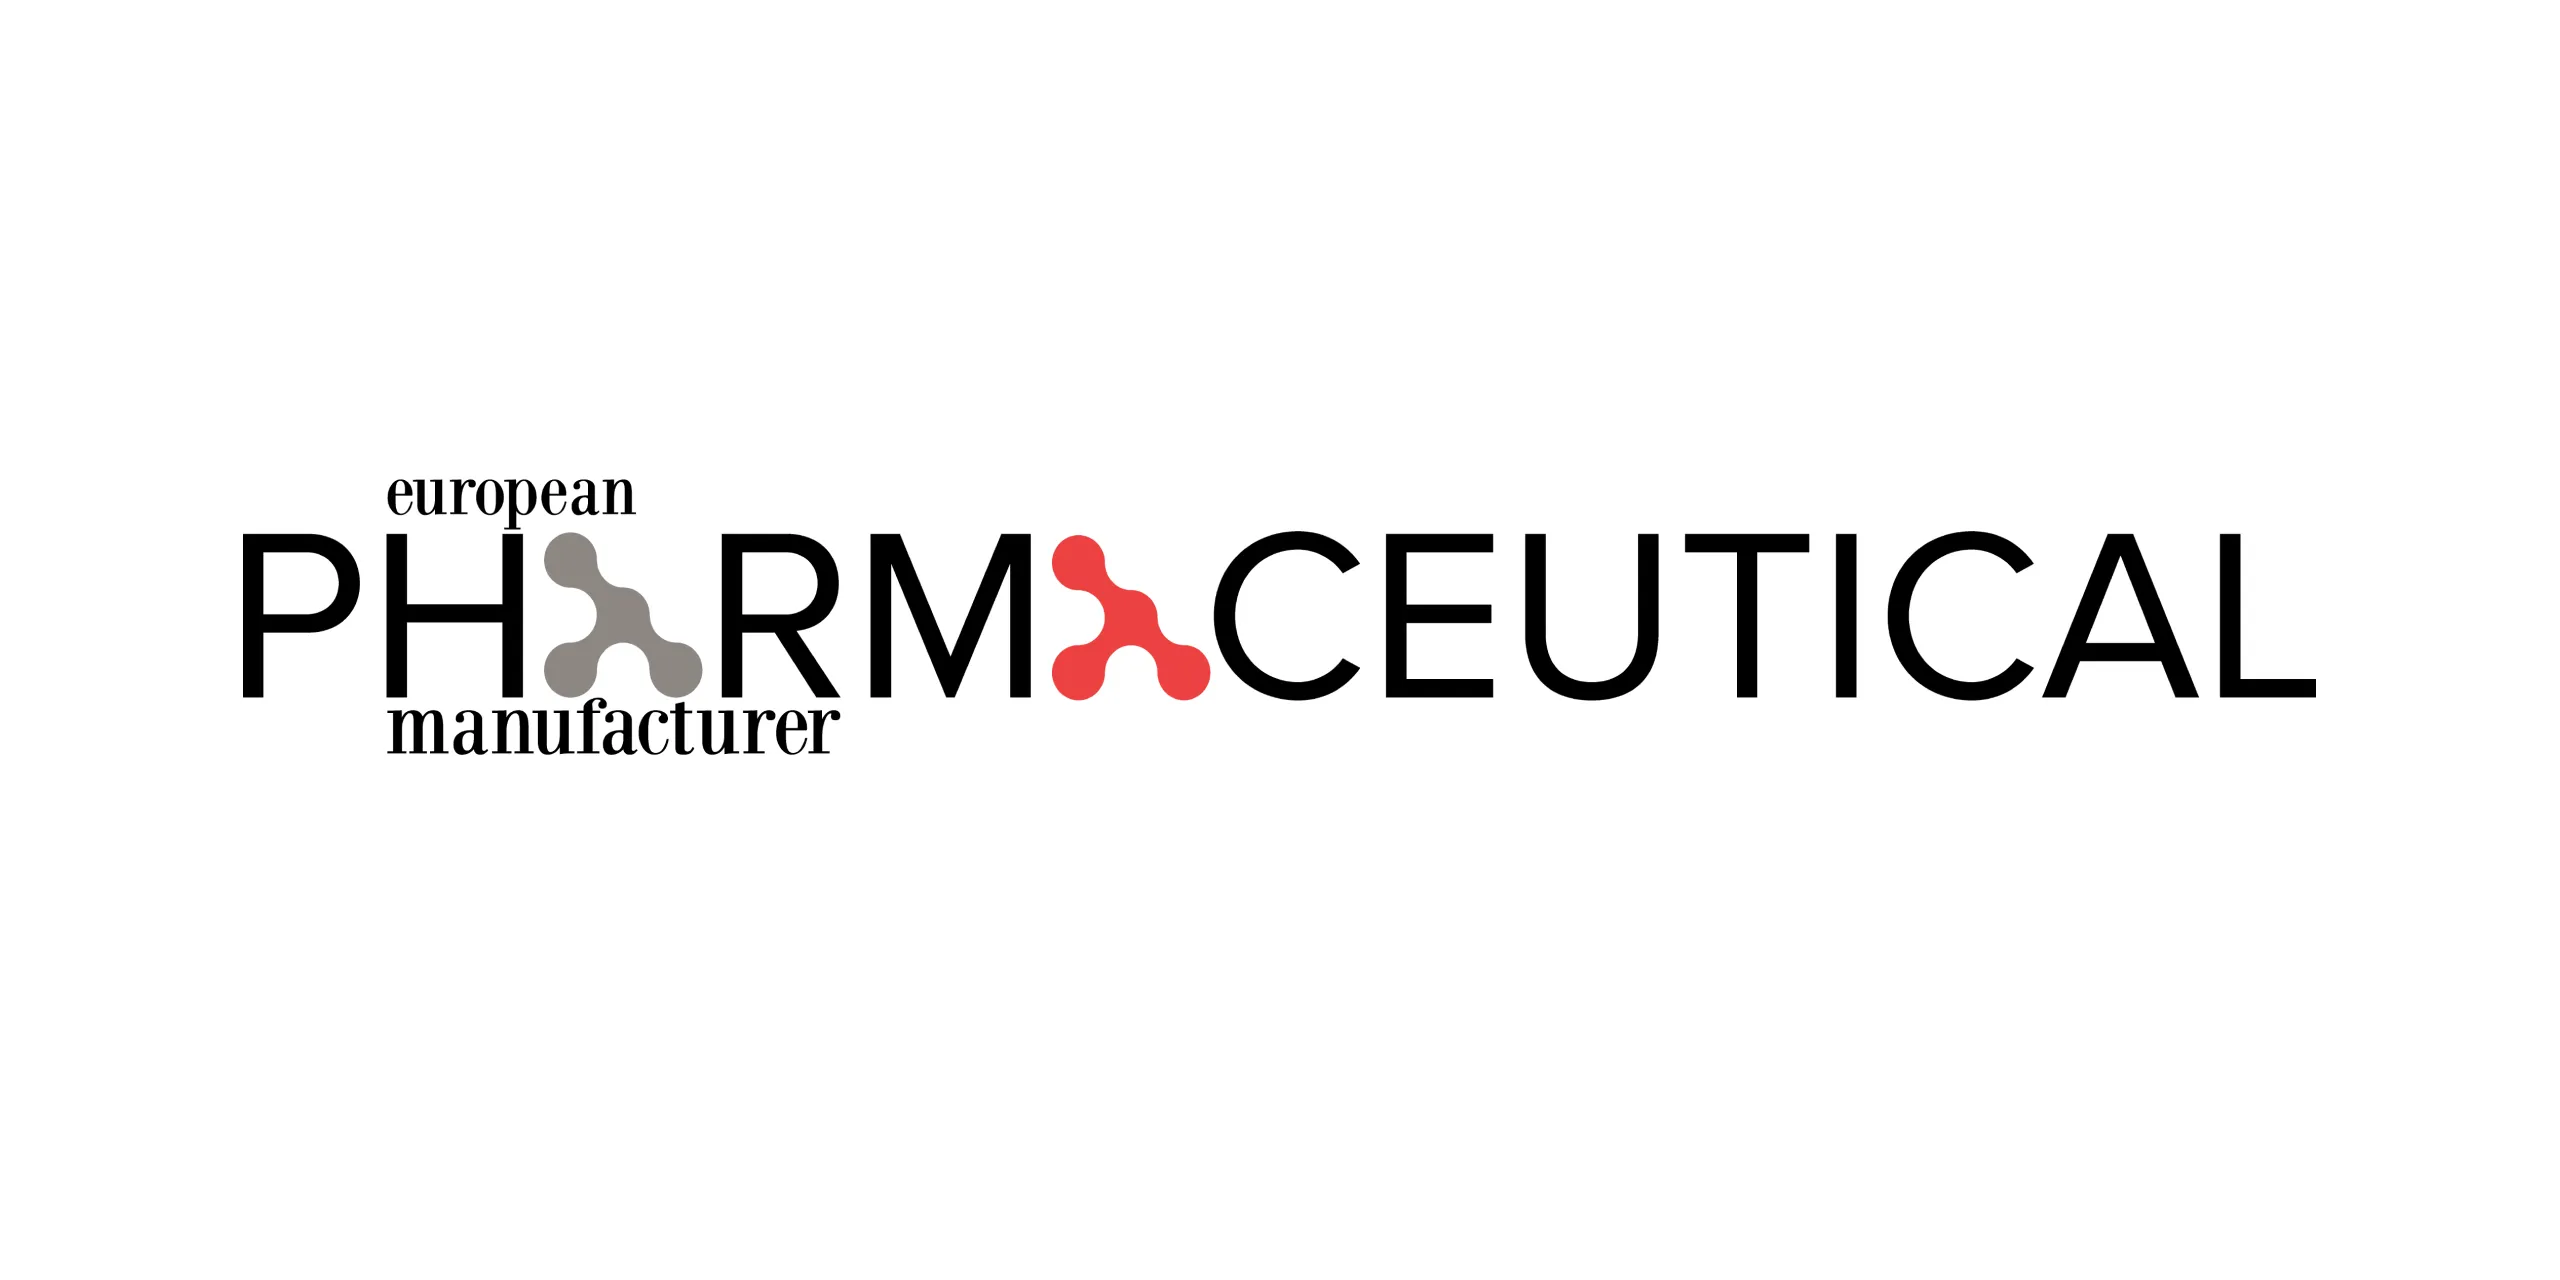 European Pharmaceutical Manufacturer logo